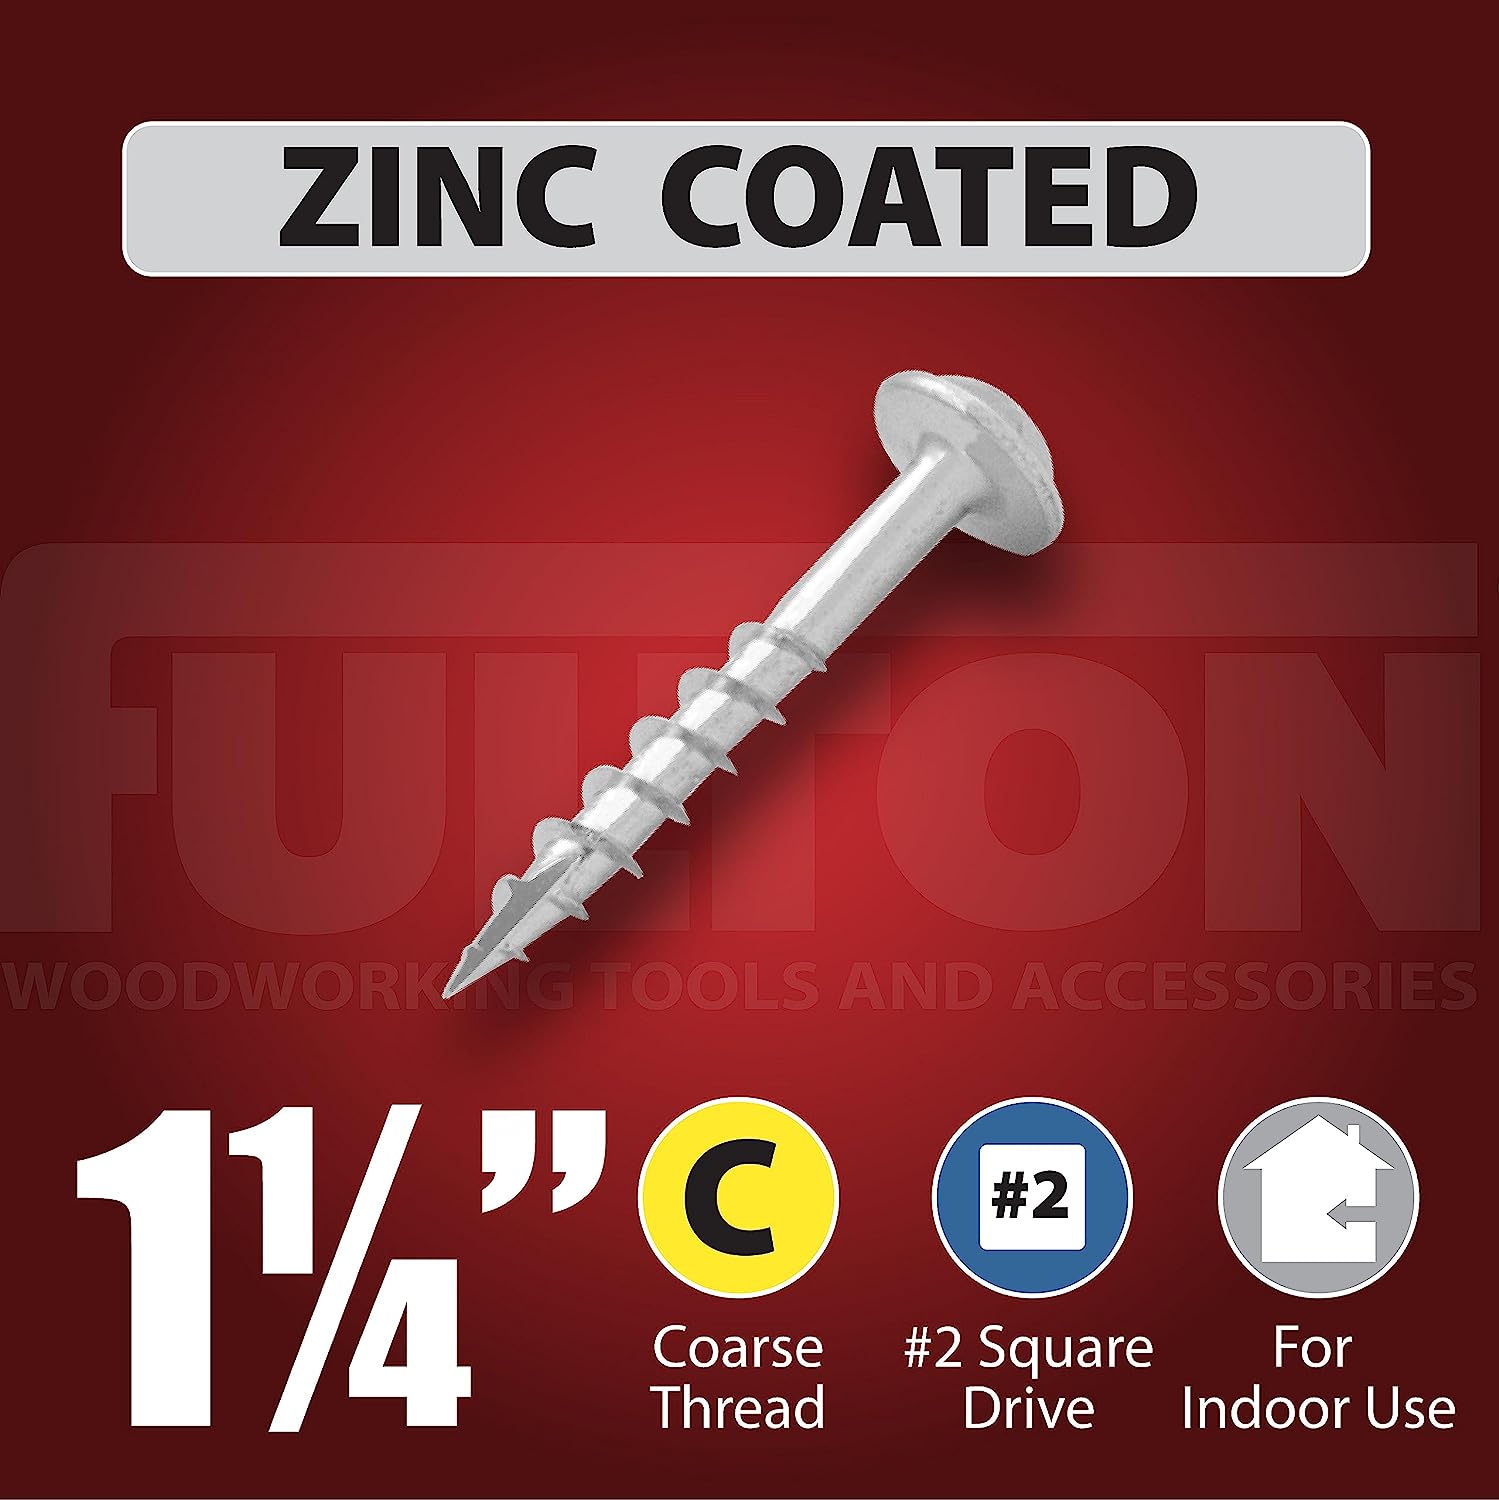 500 Zinc Self-Tapping Pocket Hole Screws - Coarse Threads